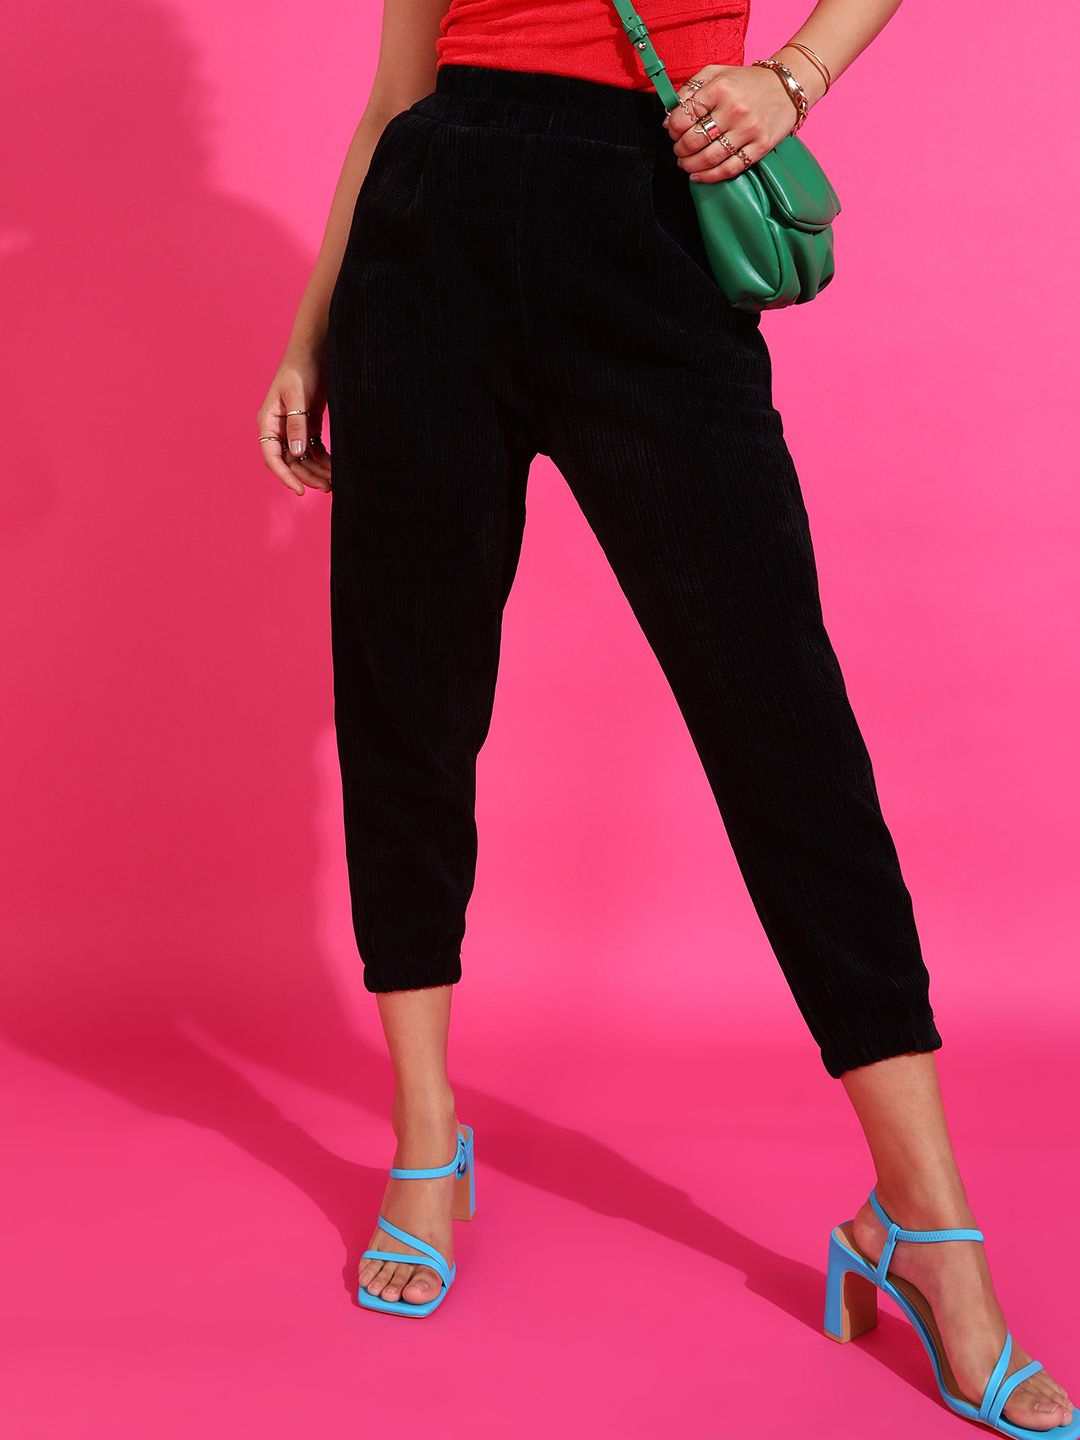 Buy Sheczzar Pink Slim Fit Jeggings for Women Online @ Tata CLiQ